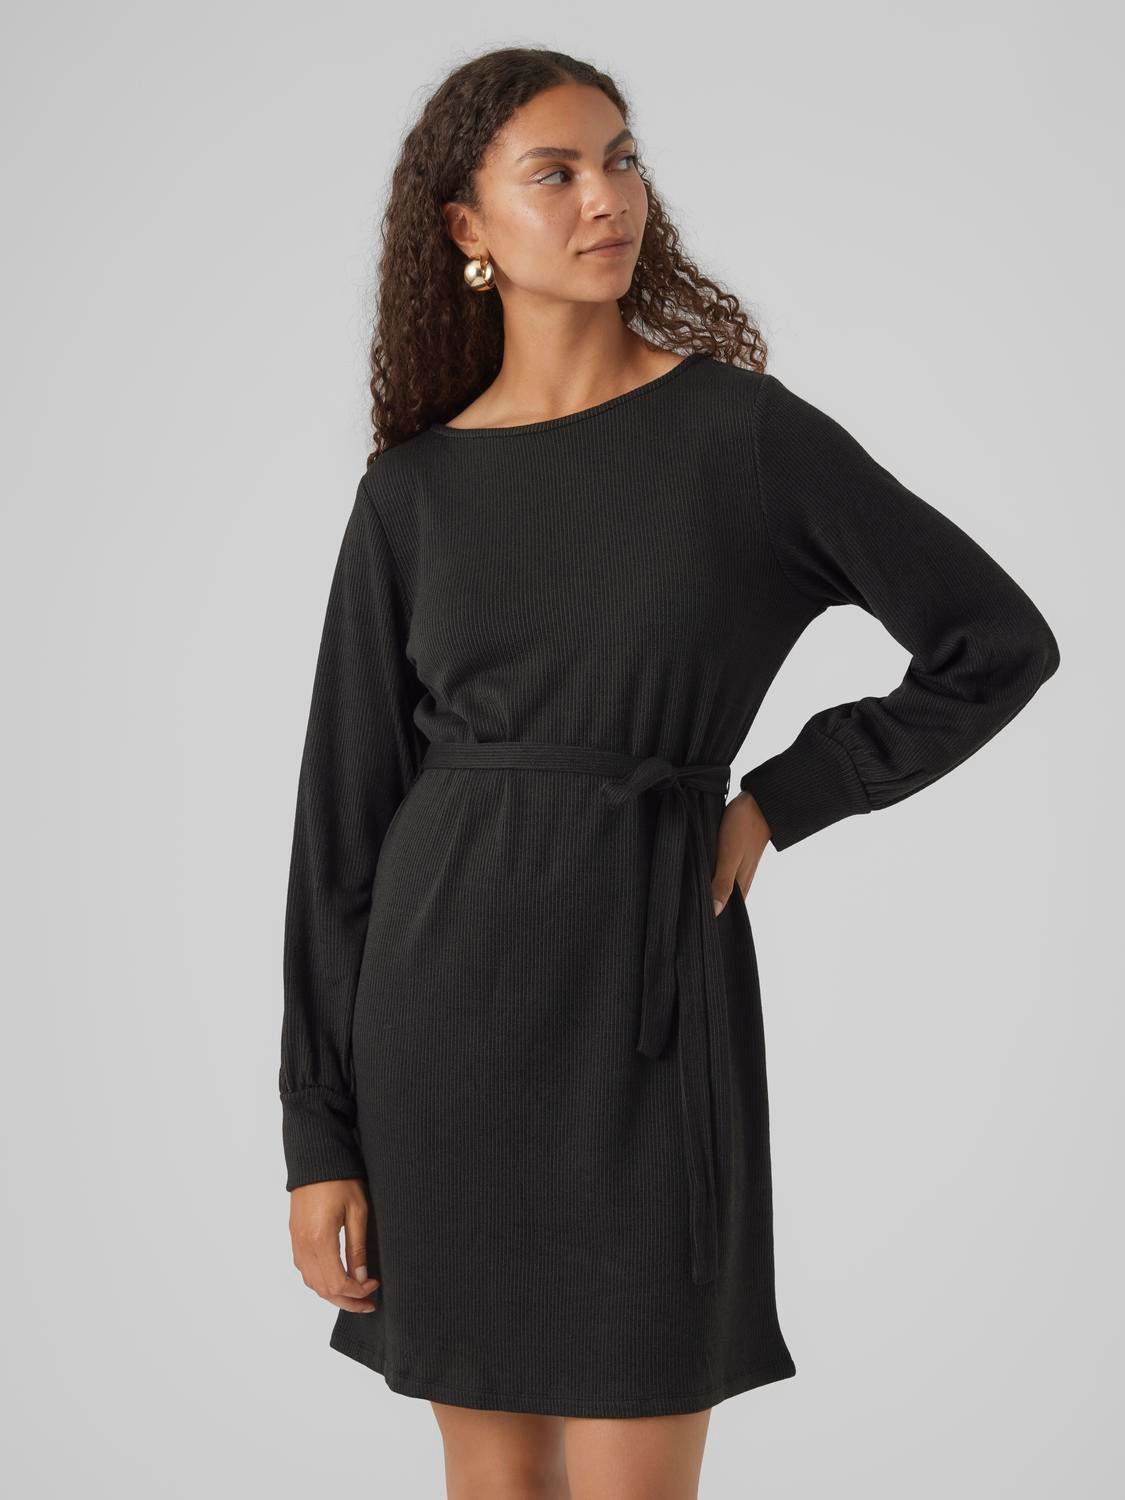 Vero Moda Black Colored Embellished Dress - Buy Vero Moda Black Colored  Embellished Dress online in India